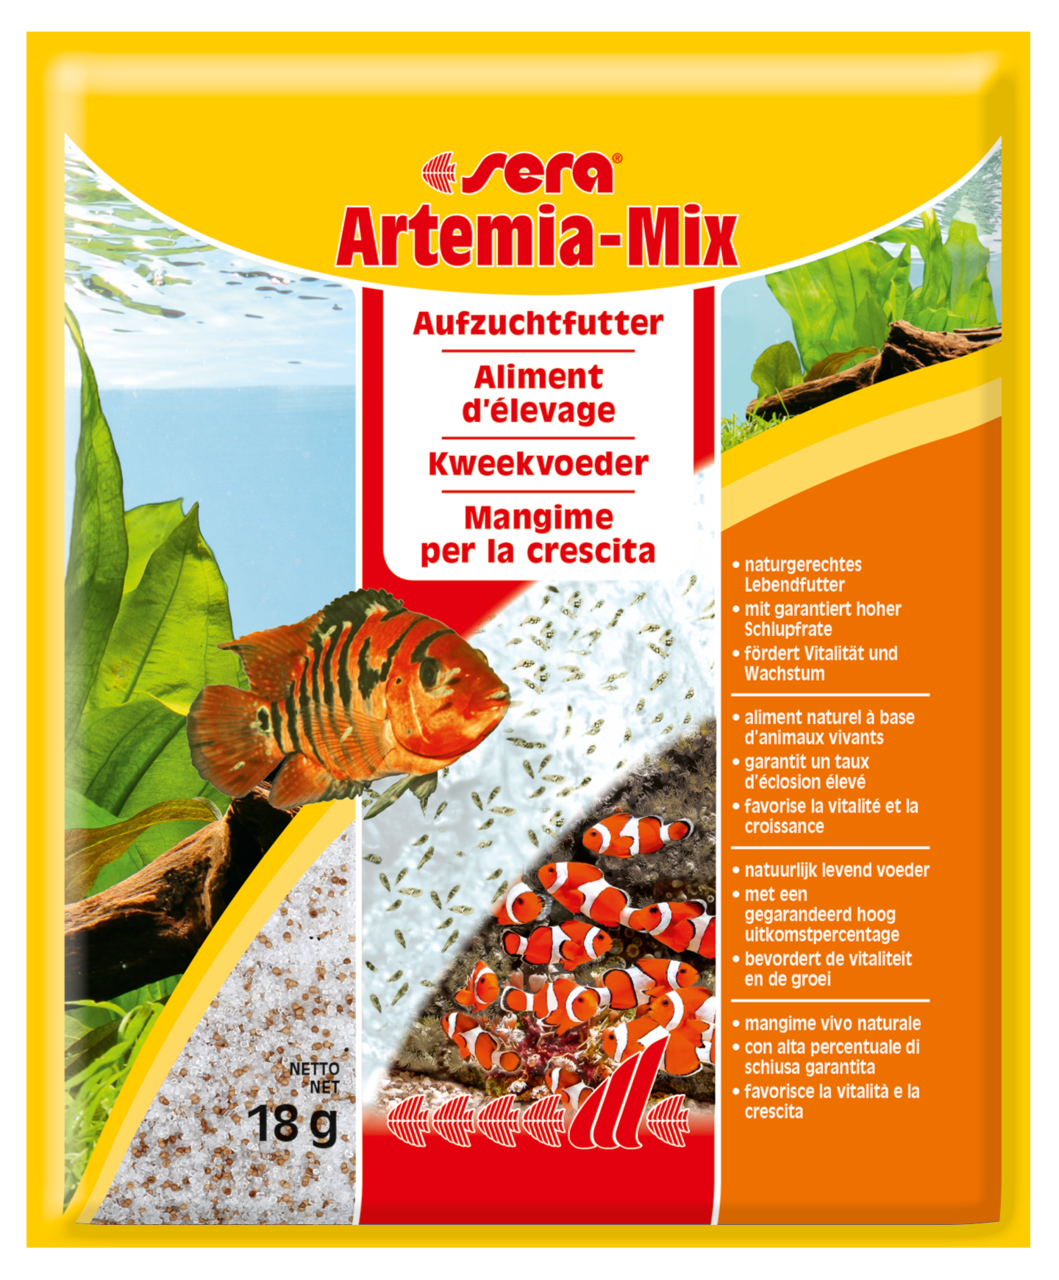 Aufzuchtfutter Artemia-Mix 18 g + product picture